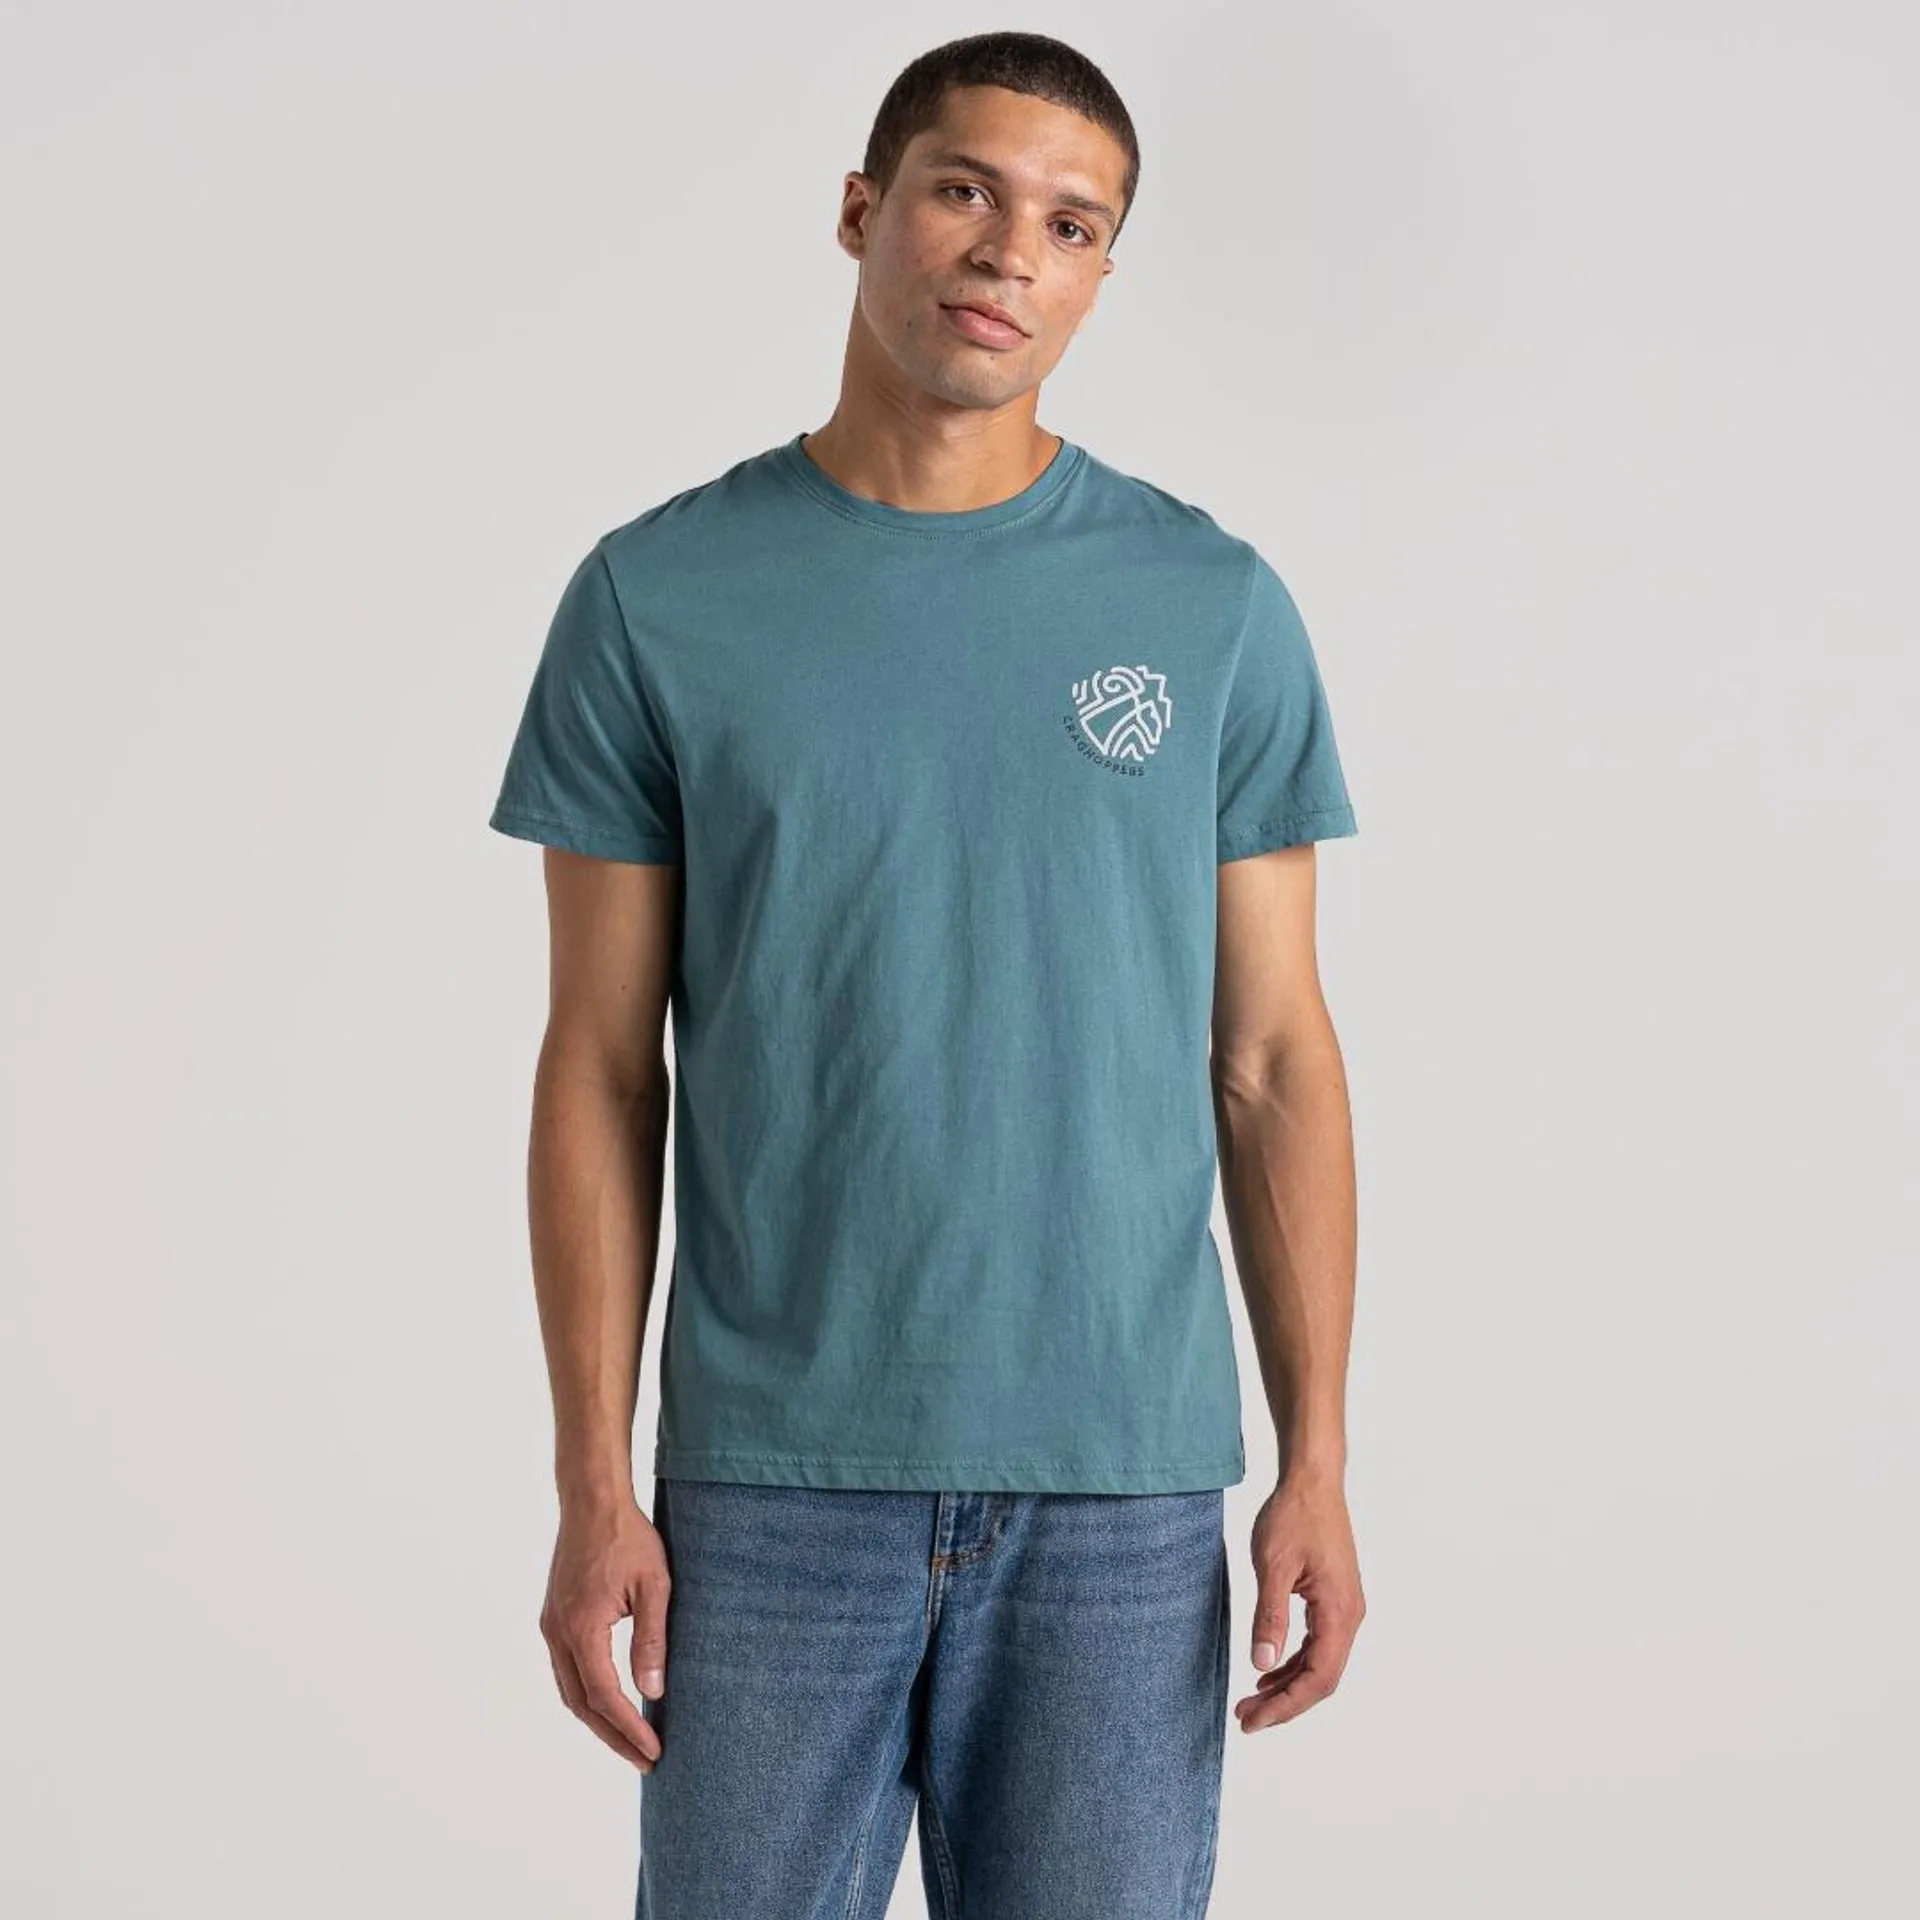 Craghoppers Men's Lucent Short Sleeved T-Shirt - Washed Teal Oval